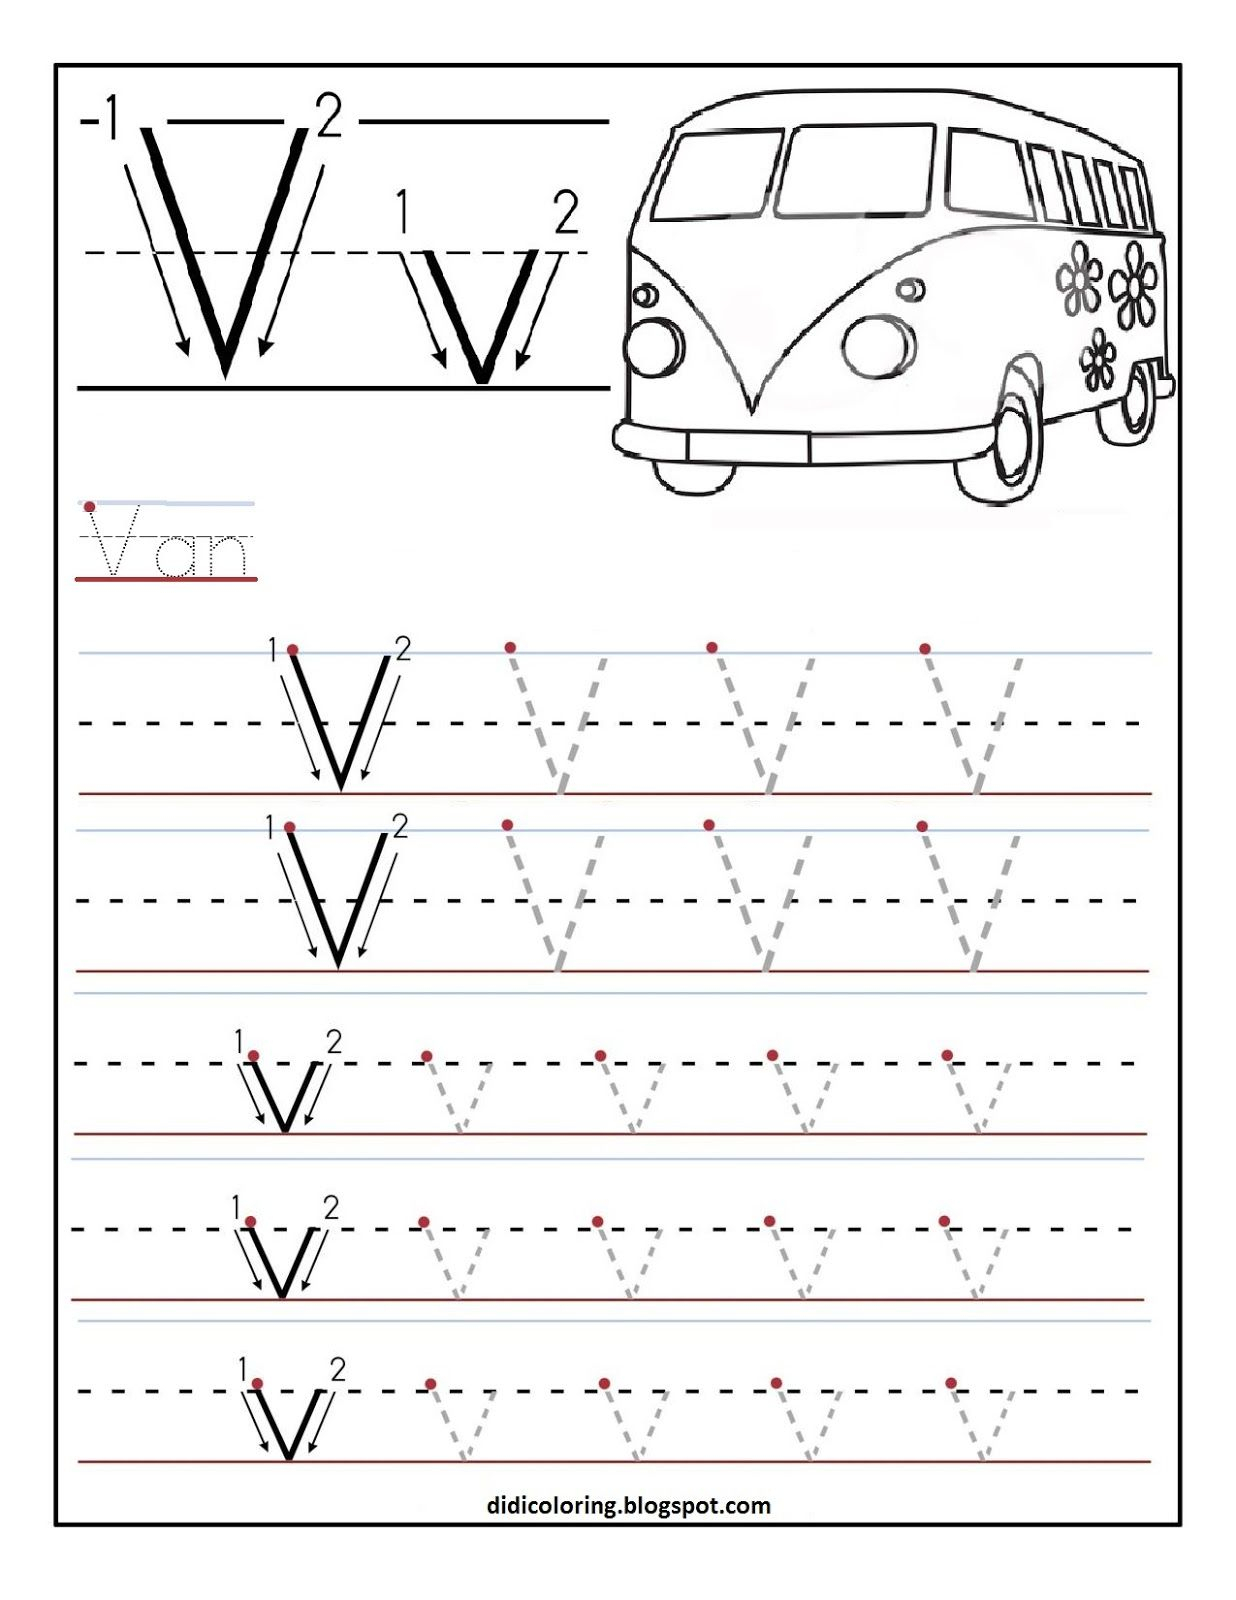 Free Printable Worksheet Letter V For Your Child To Learn intended for Tracing Letter V Worksheets